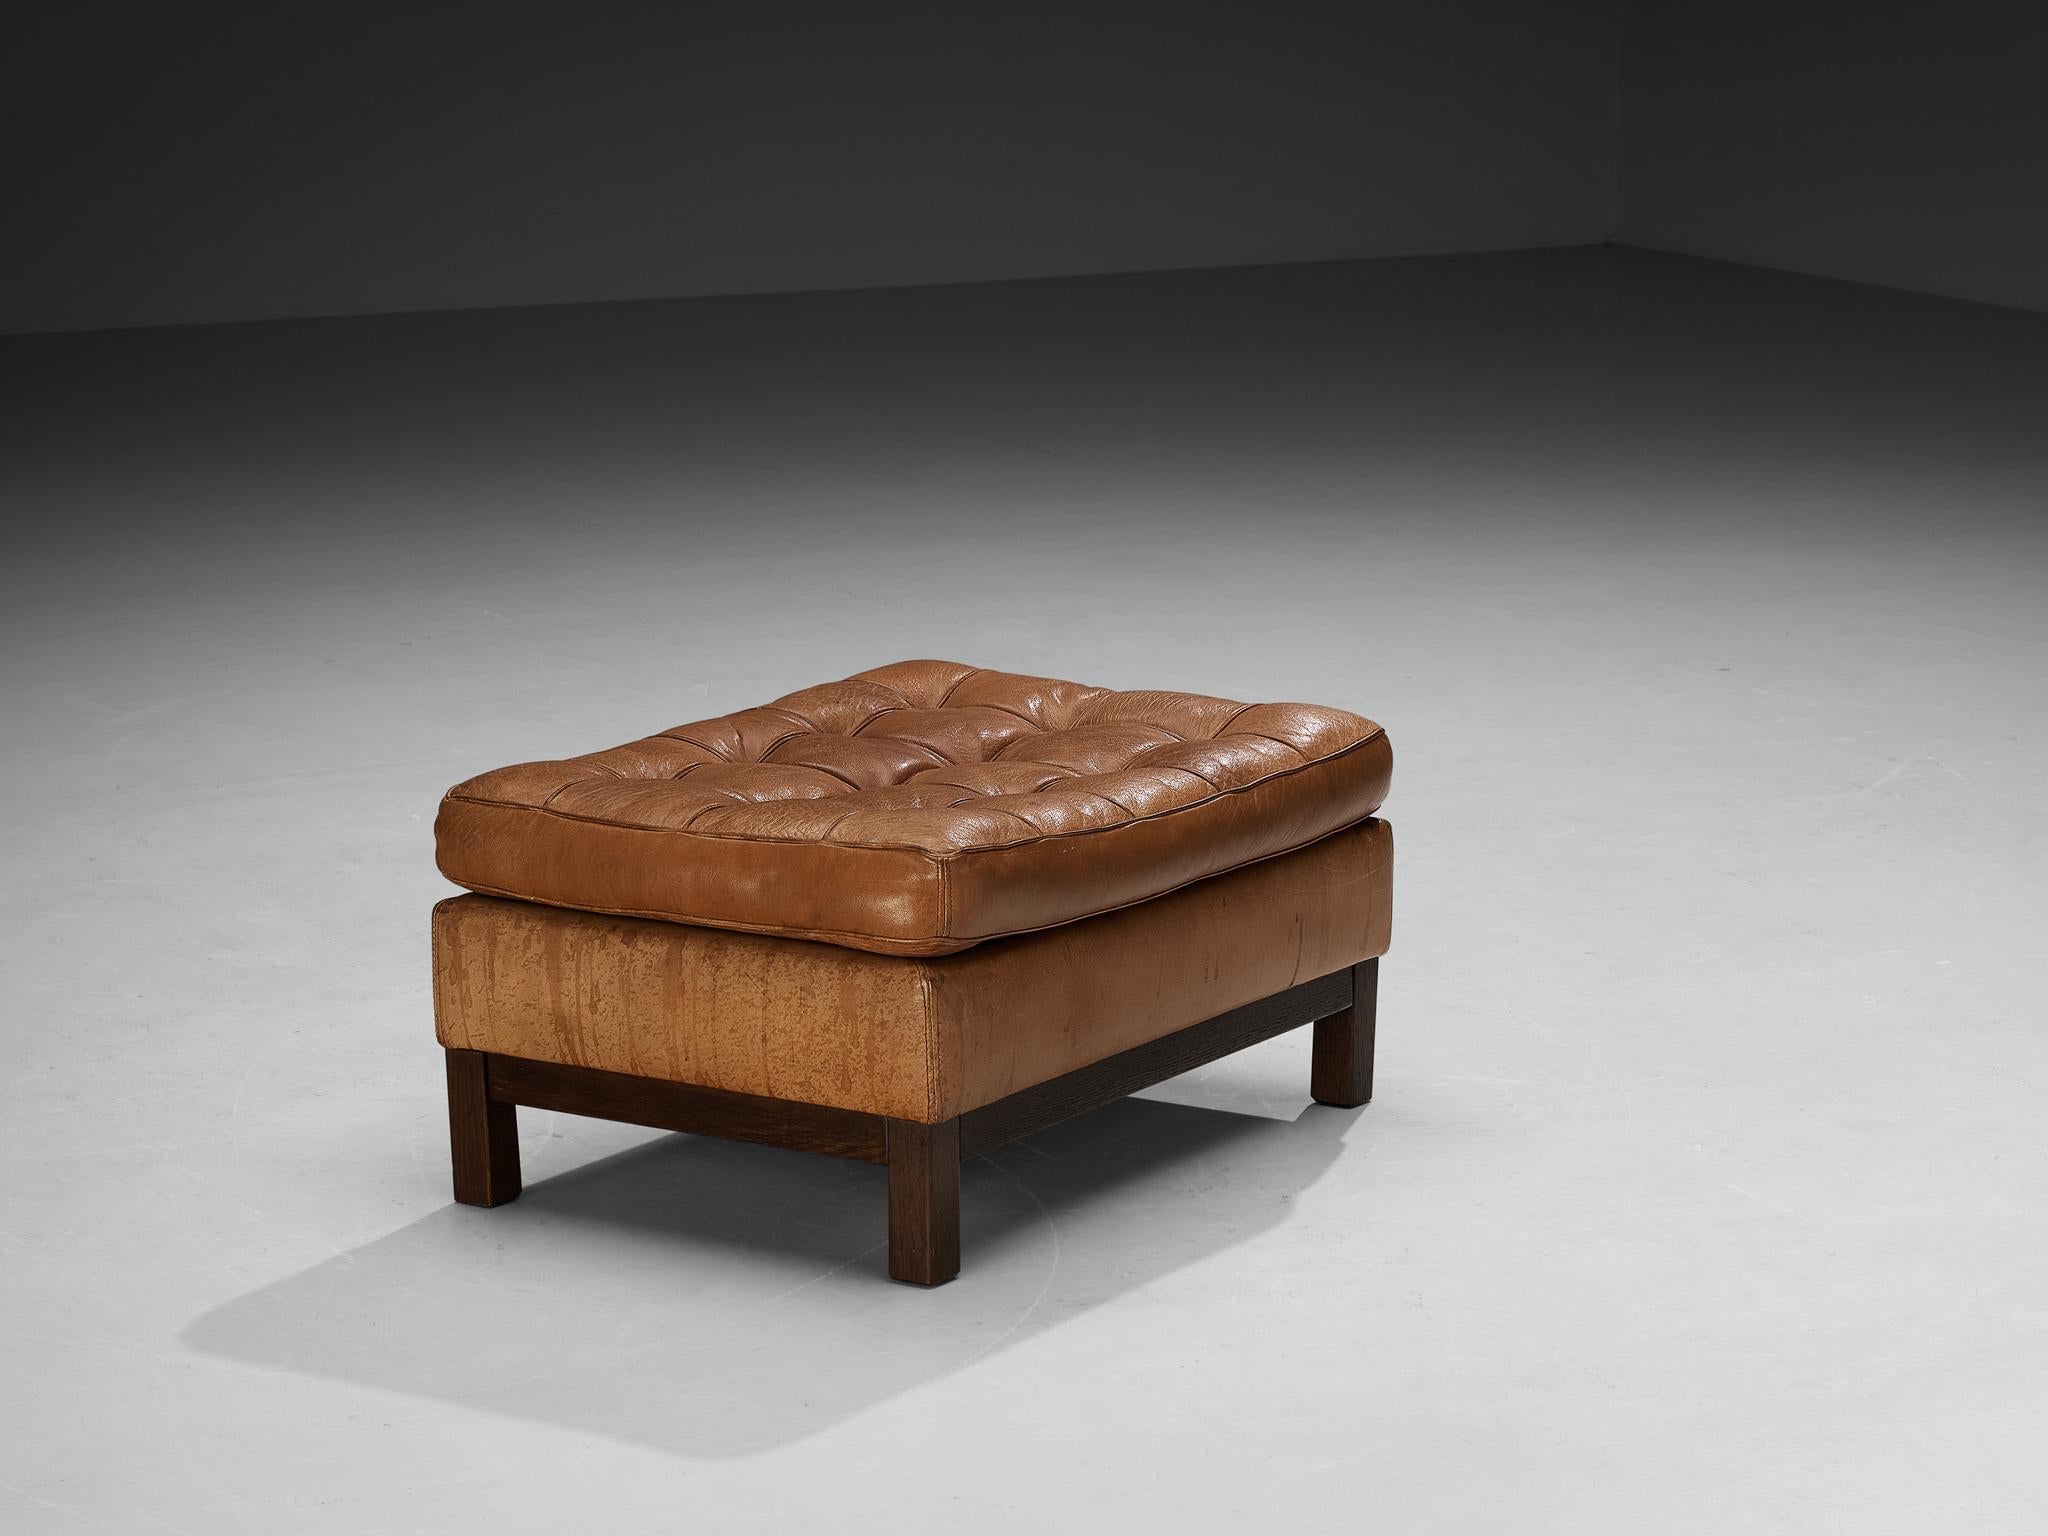 Arne Norell Ottoman 'Merkur' in Brown Leather